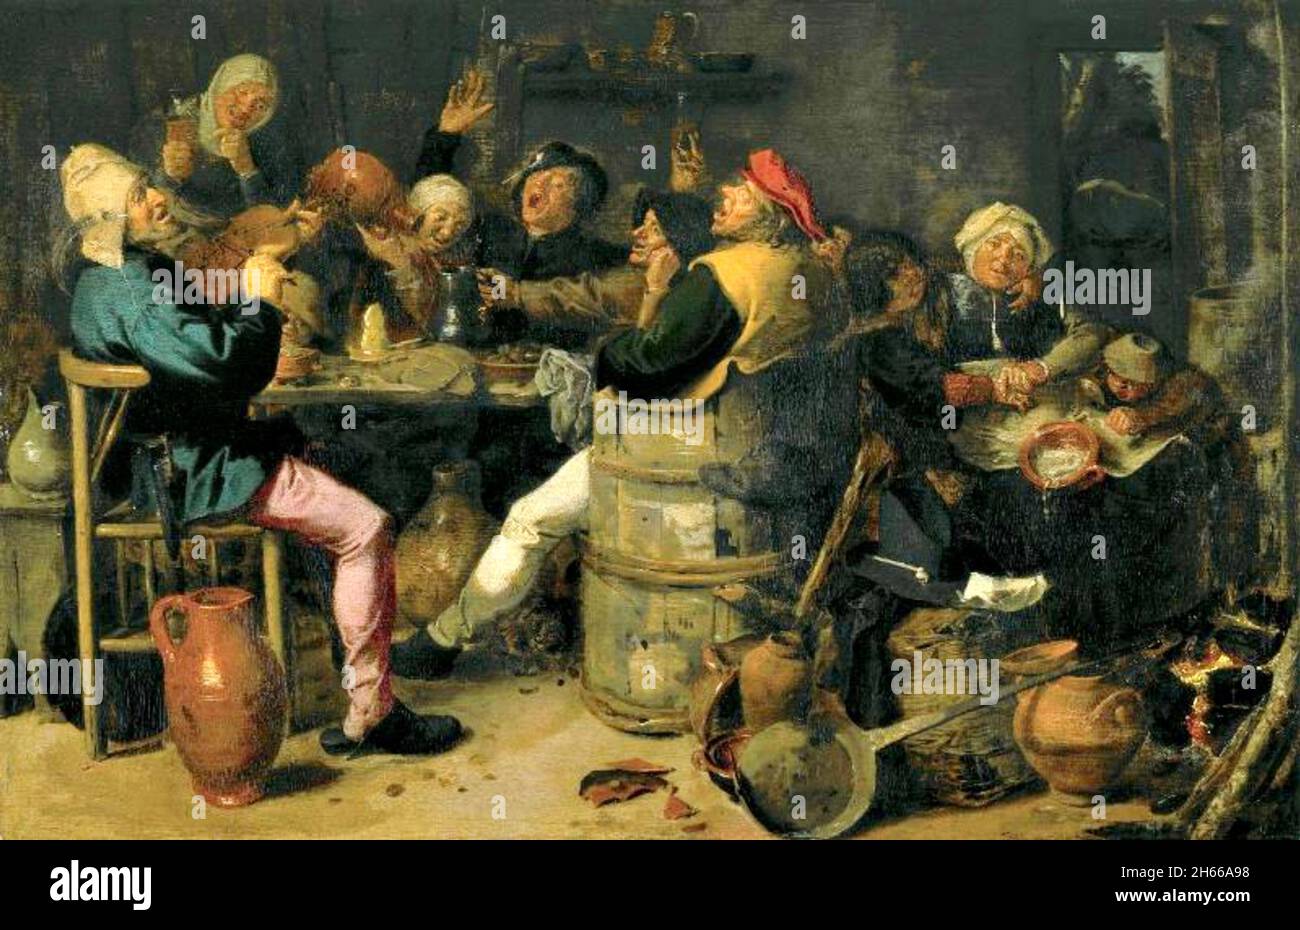 Adriaen Brouwer artwork - Peasants Feast - circa 1625 Stock Photo